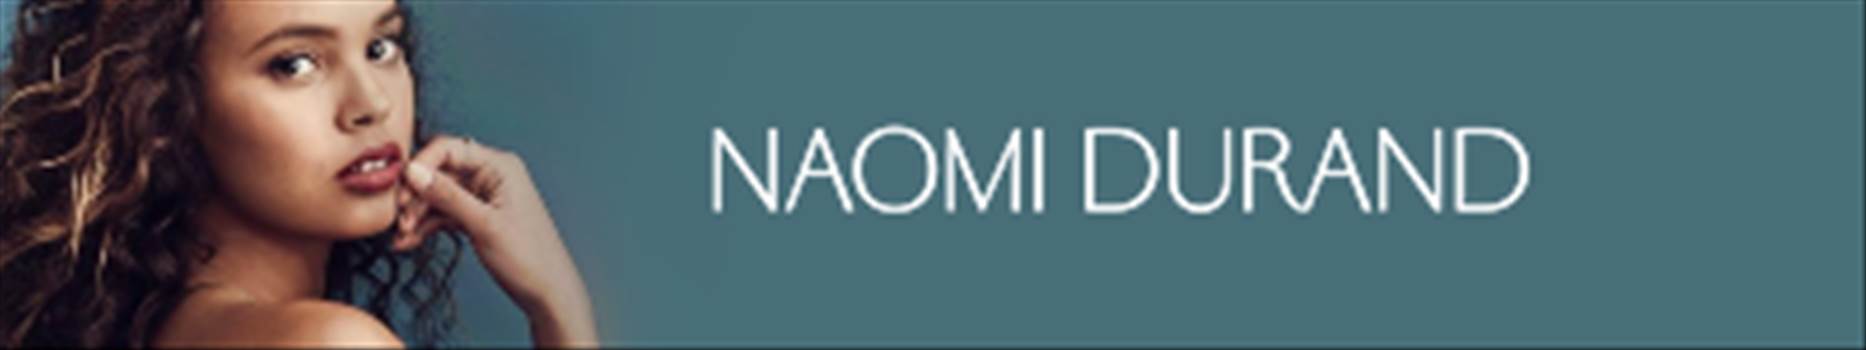 NAOMI-TRACKER.png - 